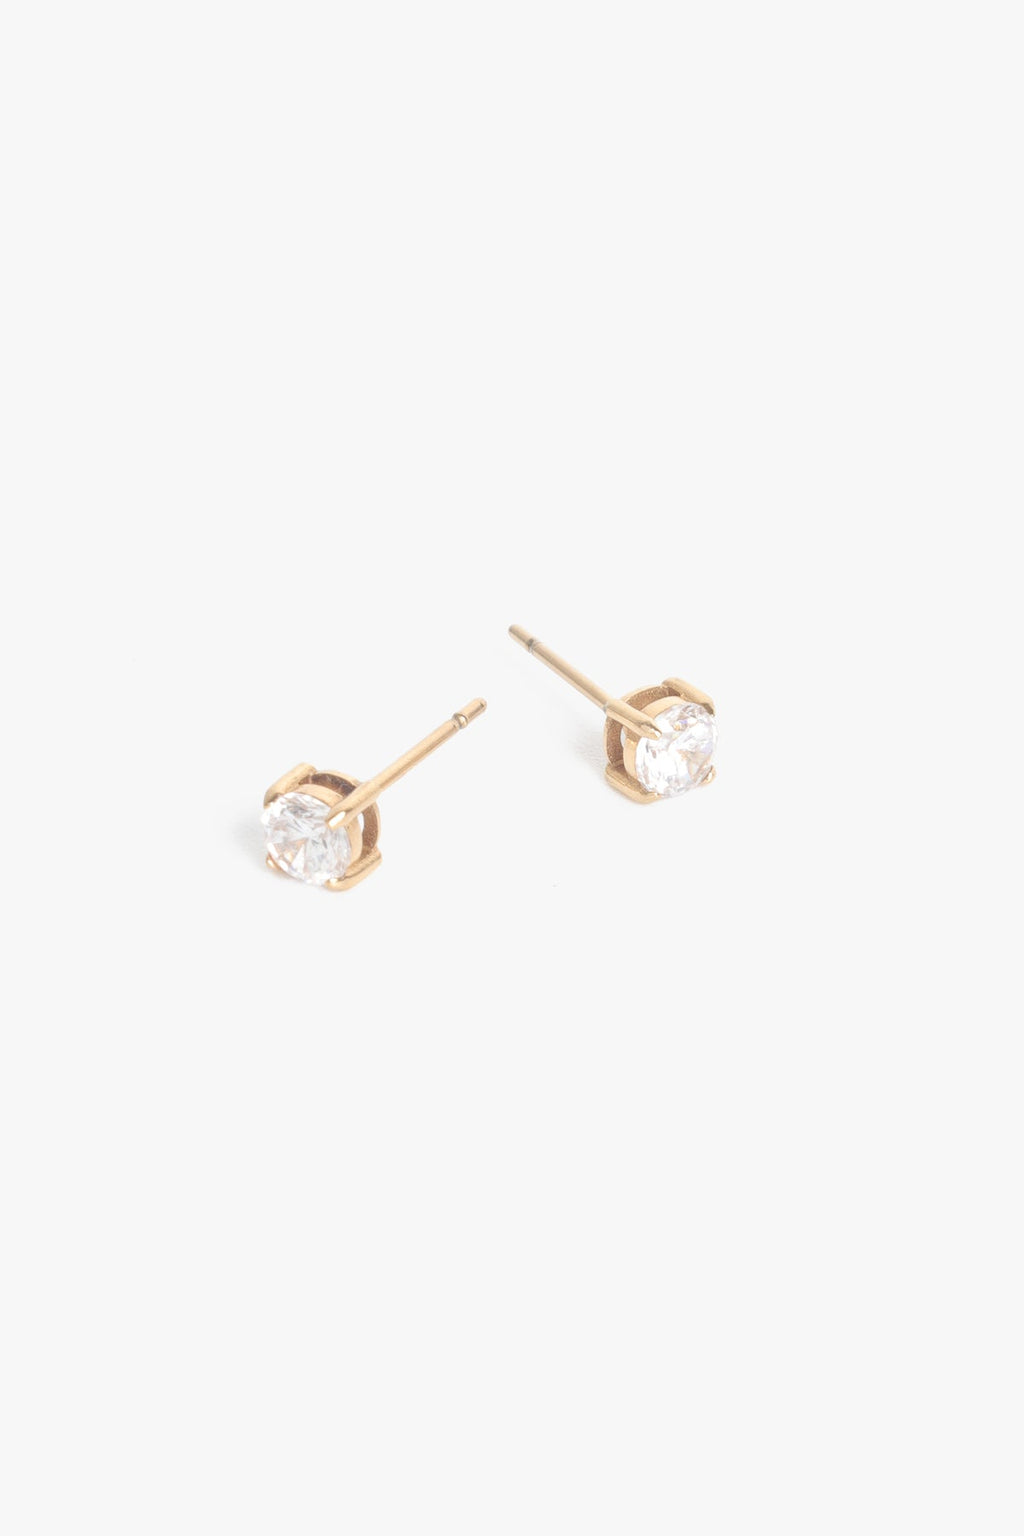 Marrin Costello Jewelry - Blair 4mm Diamond Studs - Gold